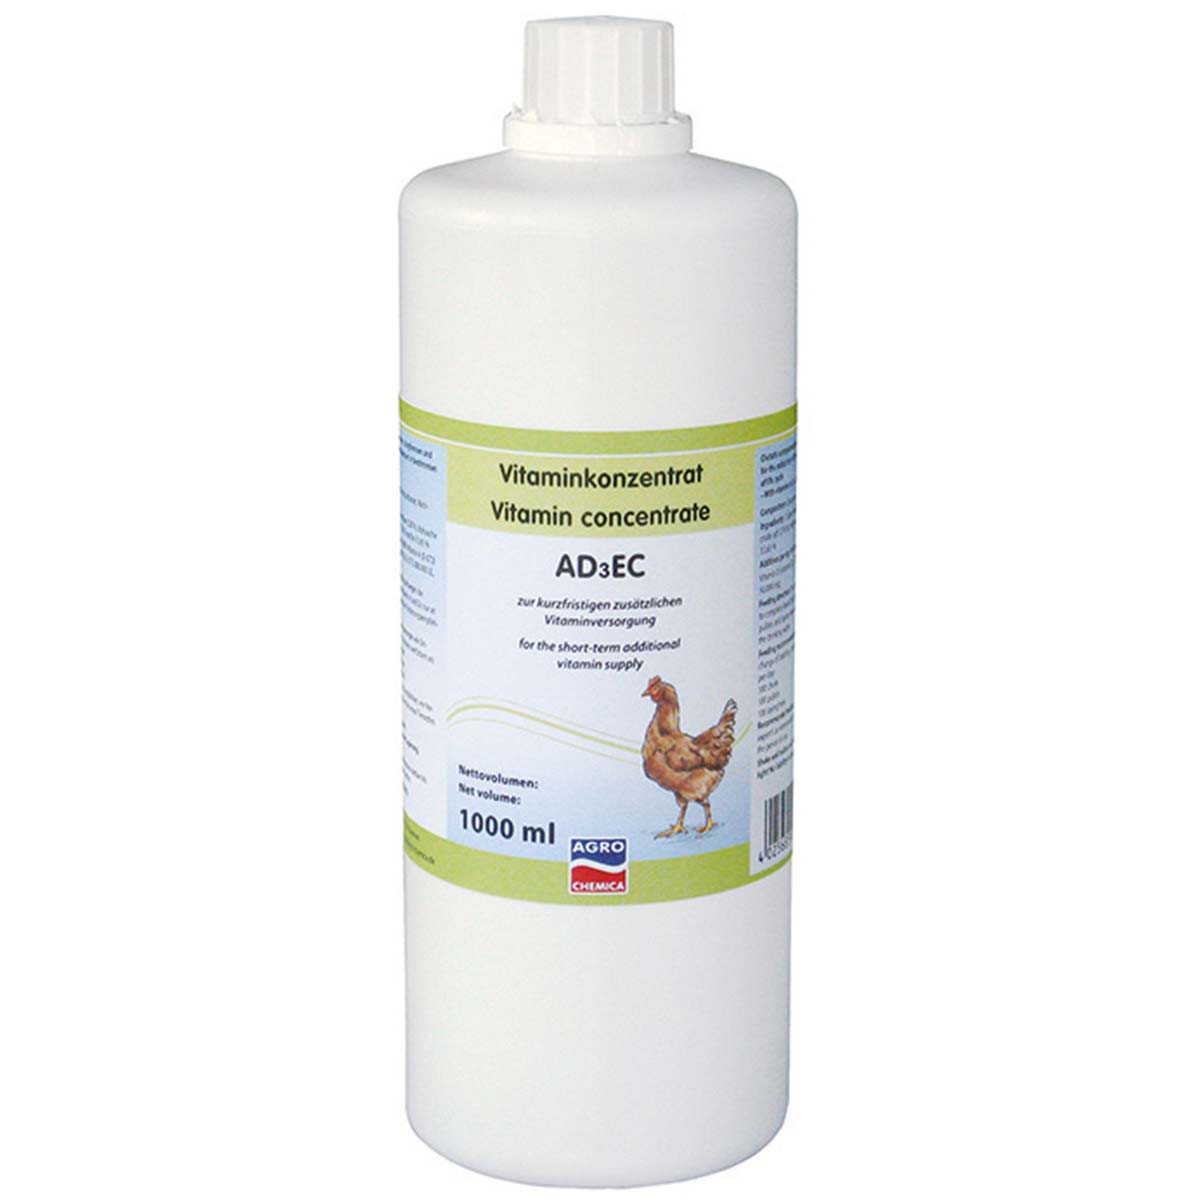 AD3EC vitamin koncentrátum baromfiknak1000 ml